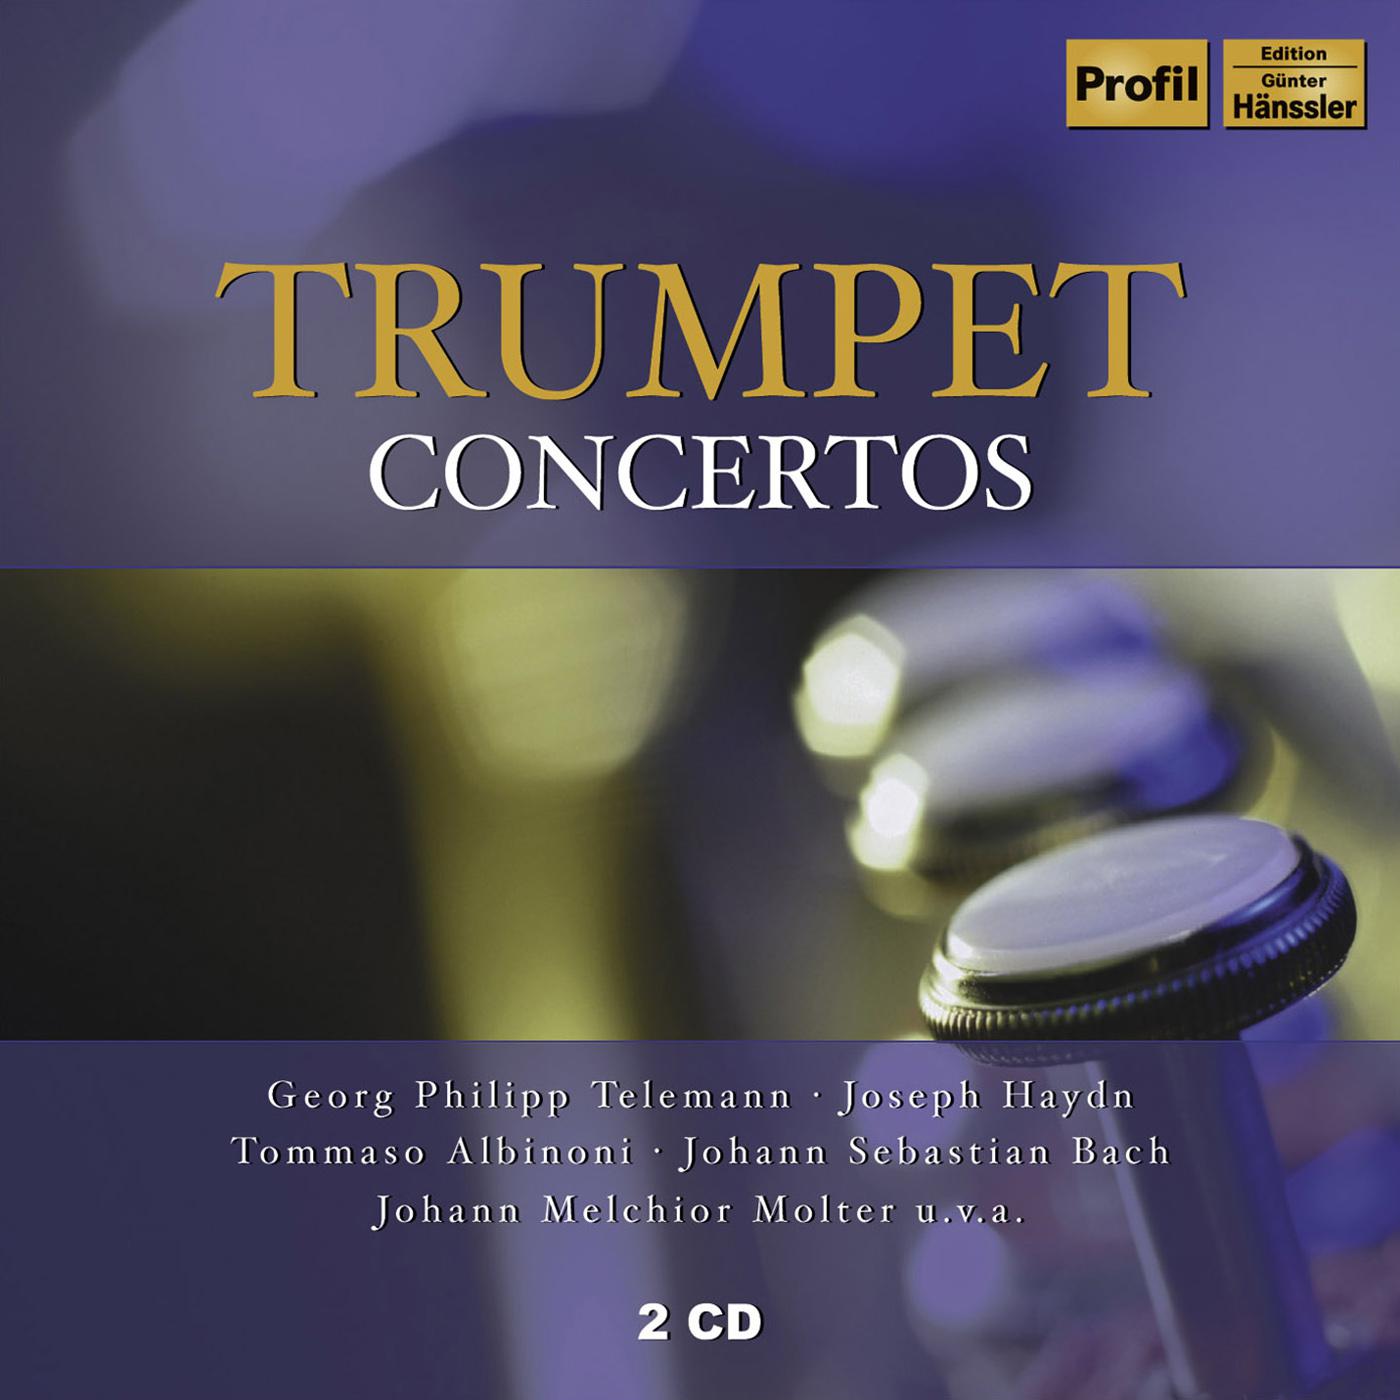 Trumpet Concert: Basch, Wolfgang  Kremer, Pierre  NERUDA, J. B.  ENDLER, J. S.  MOLTER, J. M.  LALANDE M. R. de  WALTER, J. G.  TELEMANN, G. F.